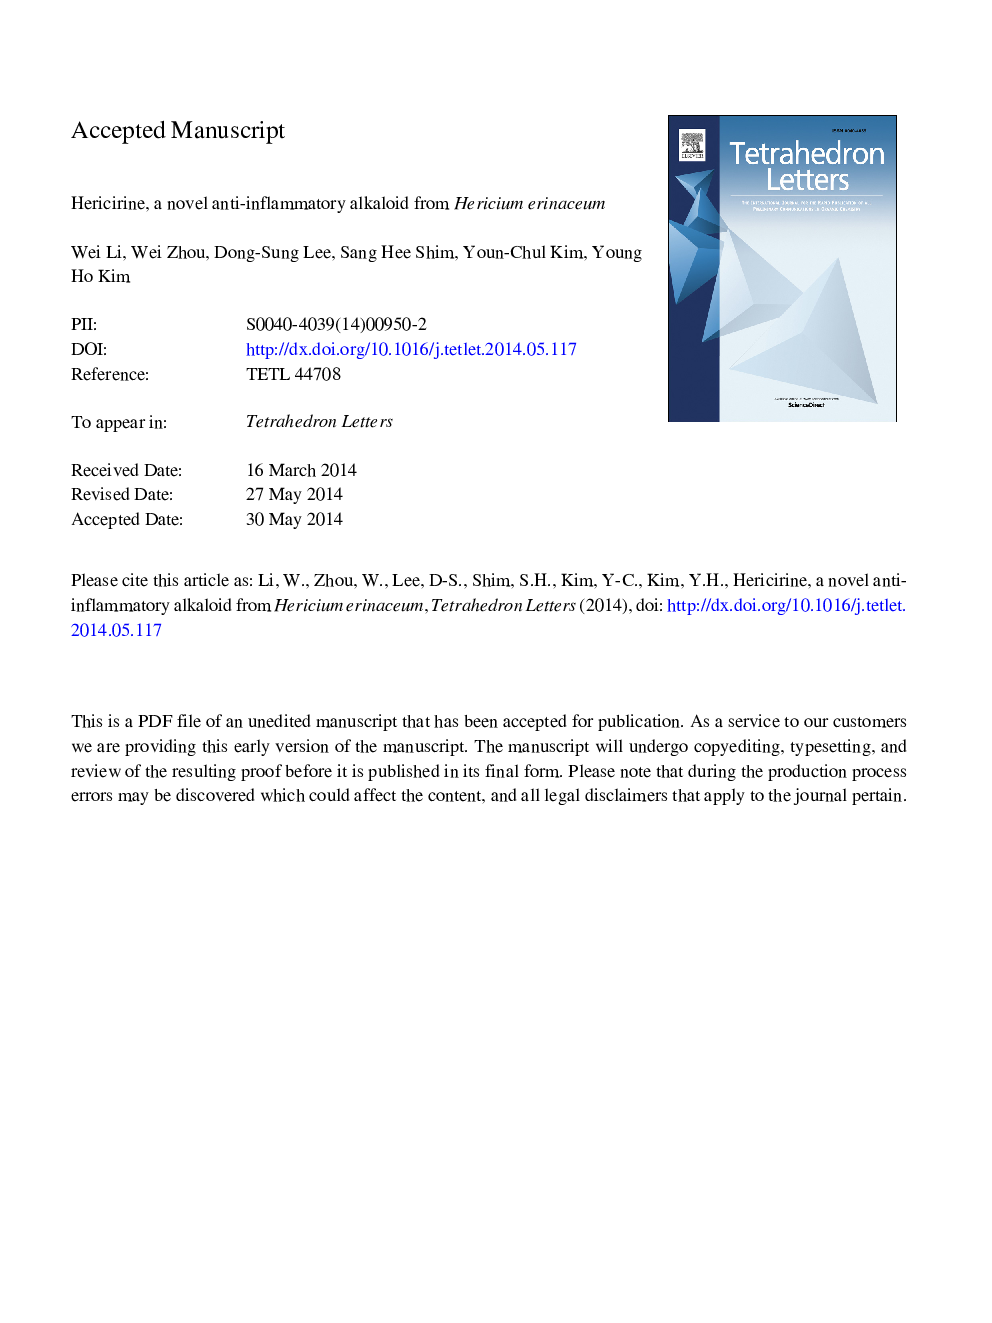 Hericirine, a novel anti-inflammatory alkaloid from Hericium erinaceum